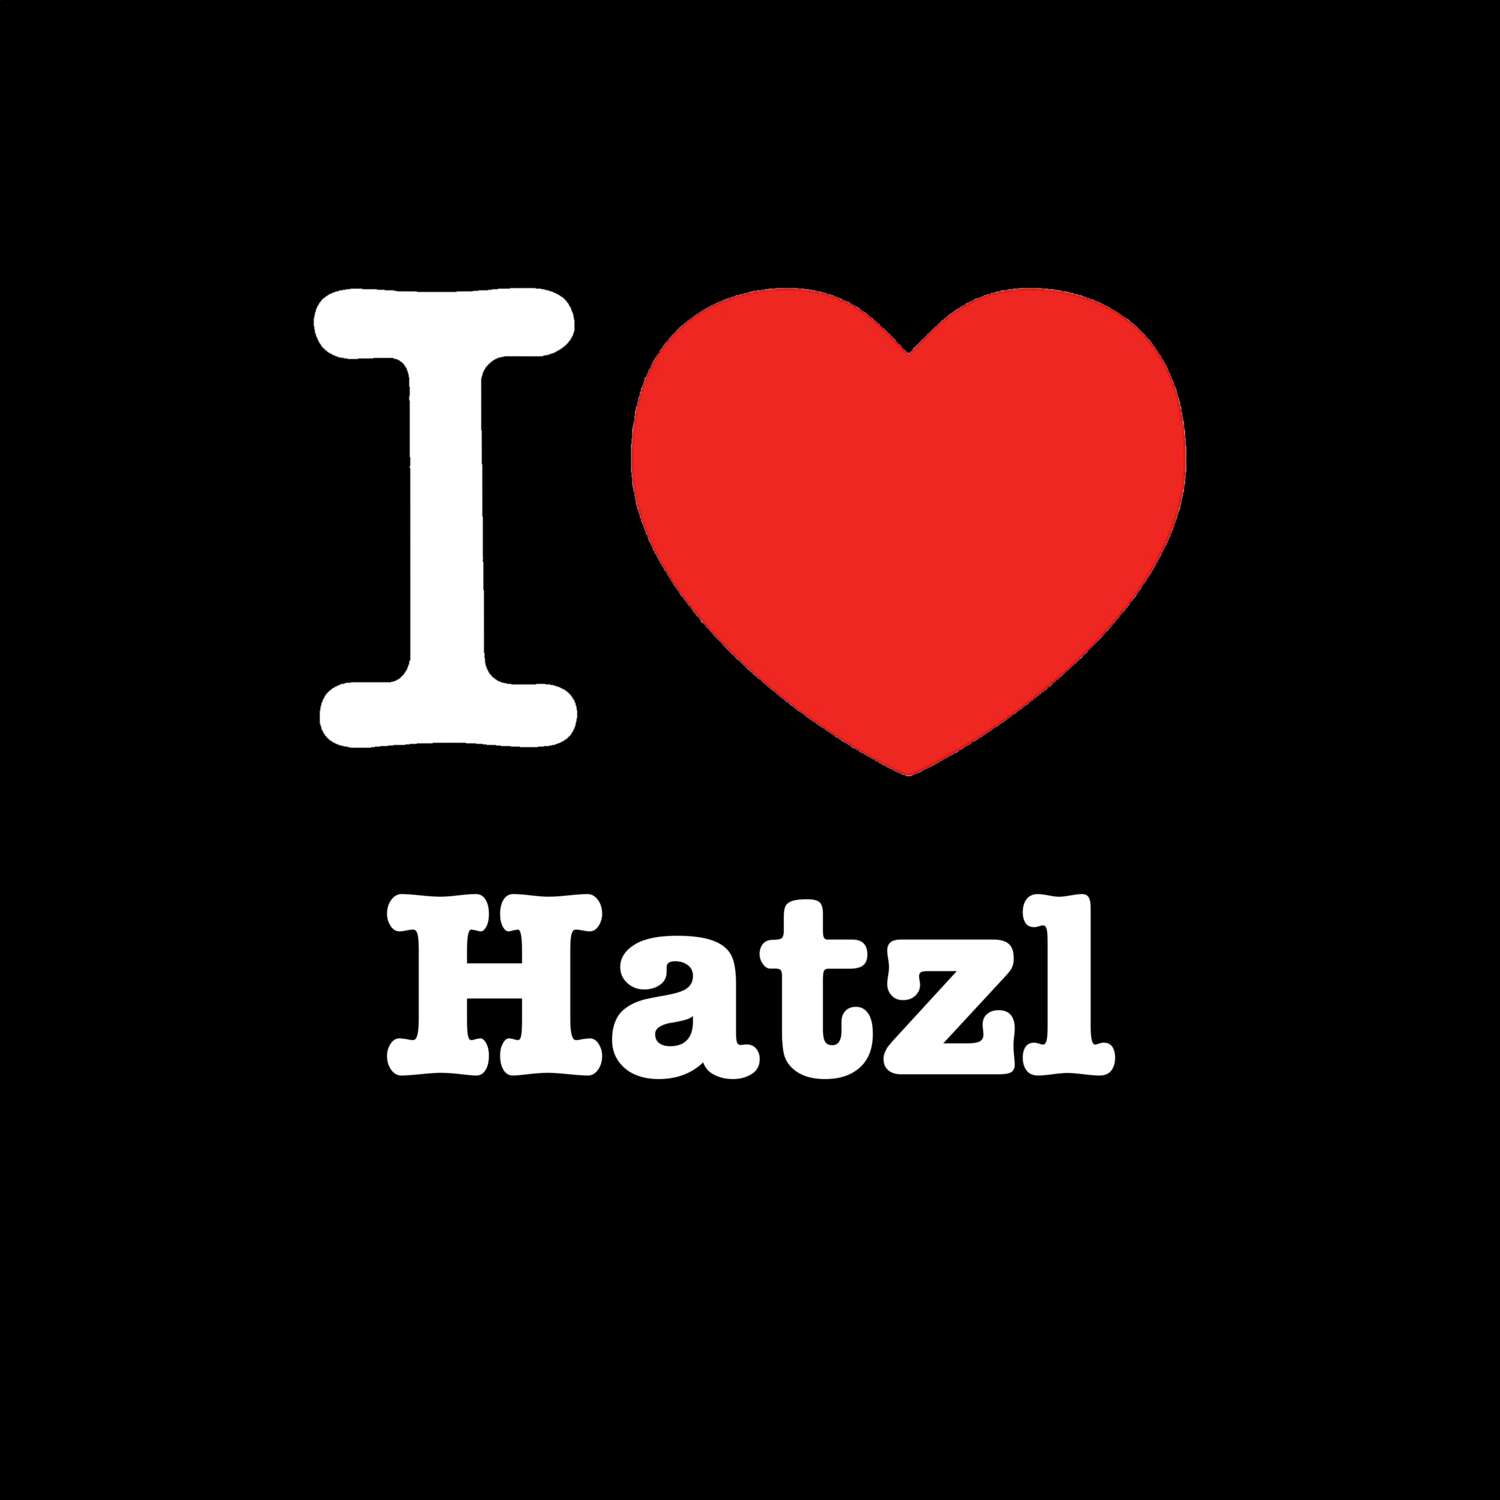 Hatzl T-Shirt »I love«